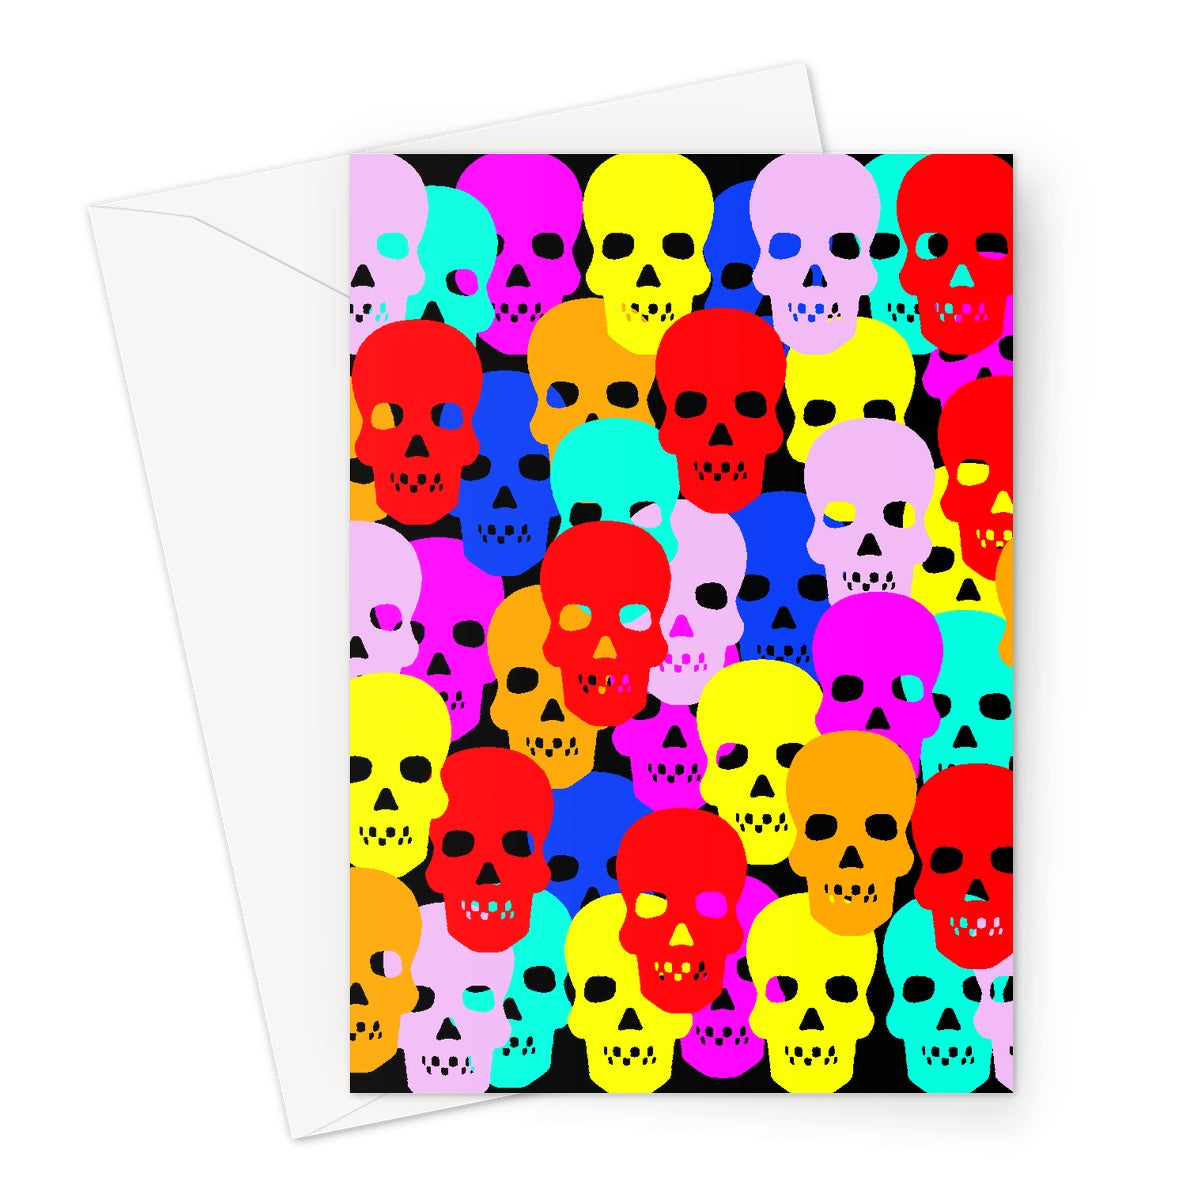 Rainbow skulls Greeting Card in black